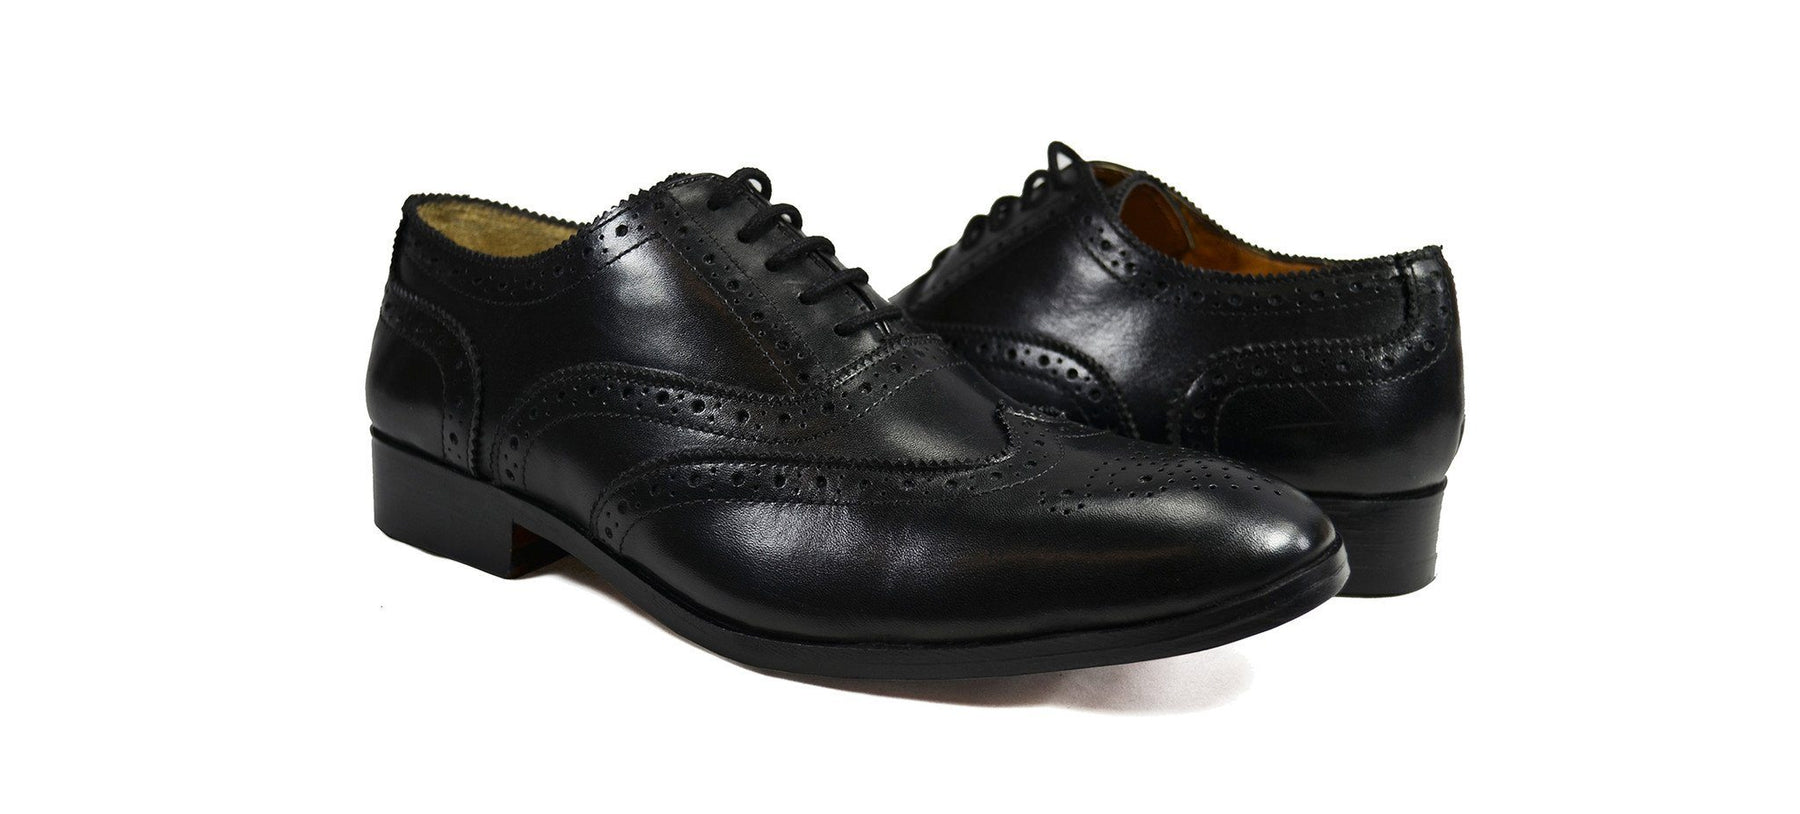 BERKLEY Full Brogue Derby in Black. All Leather Dress Shoes | Paul Malone